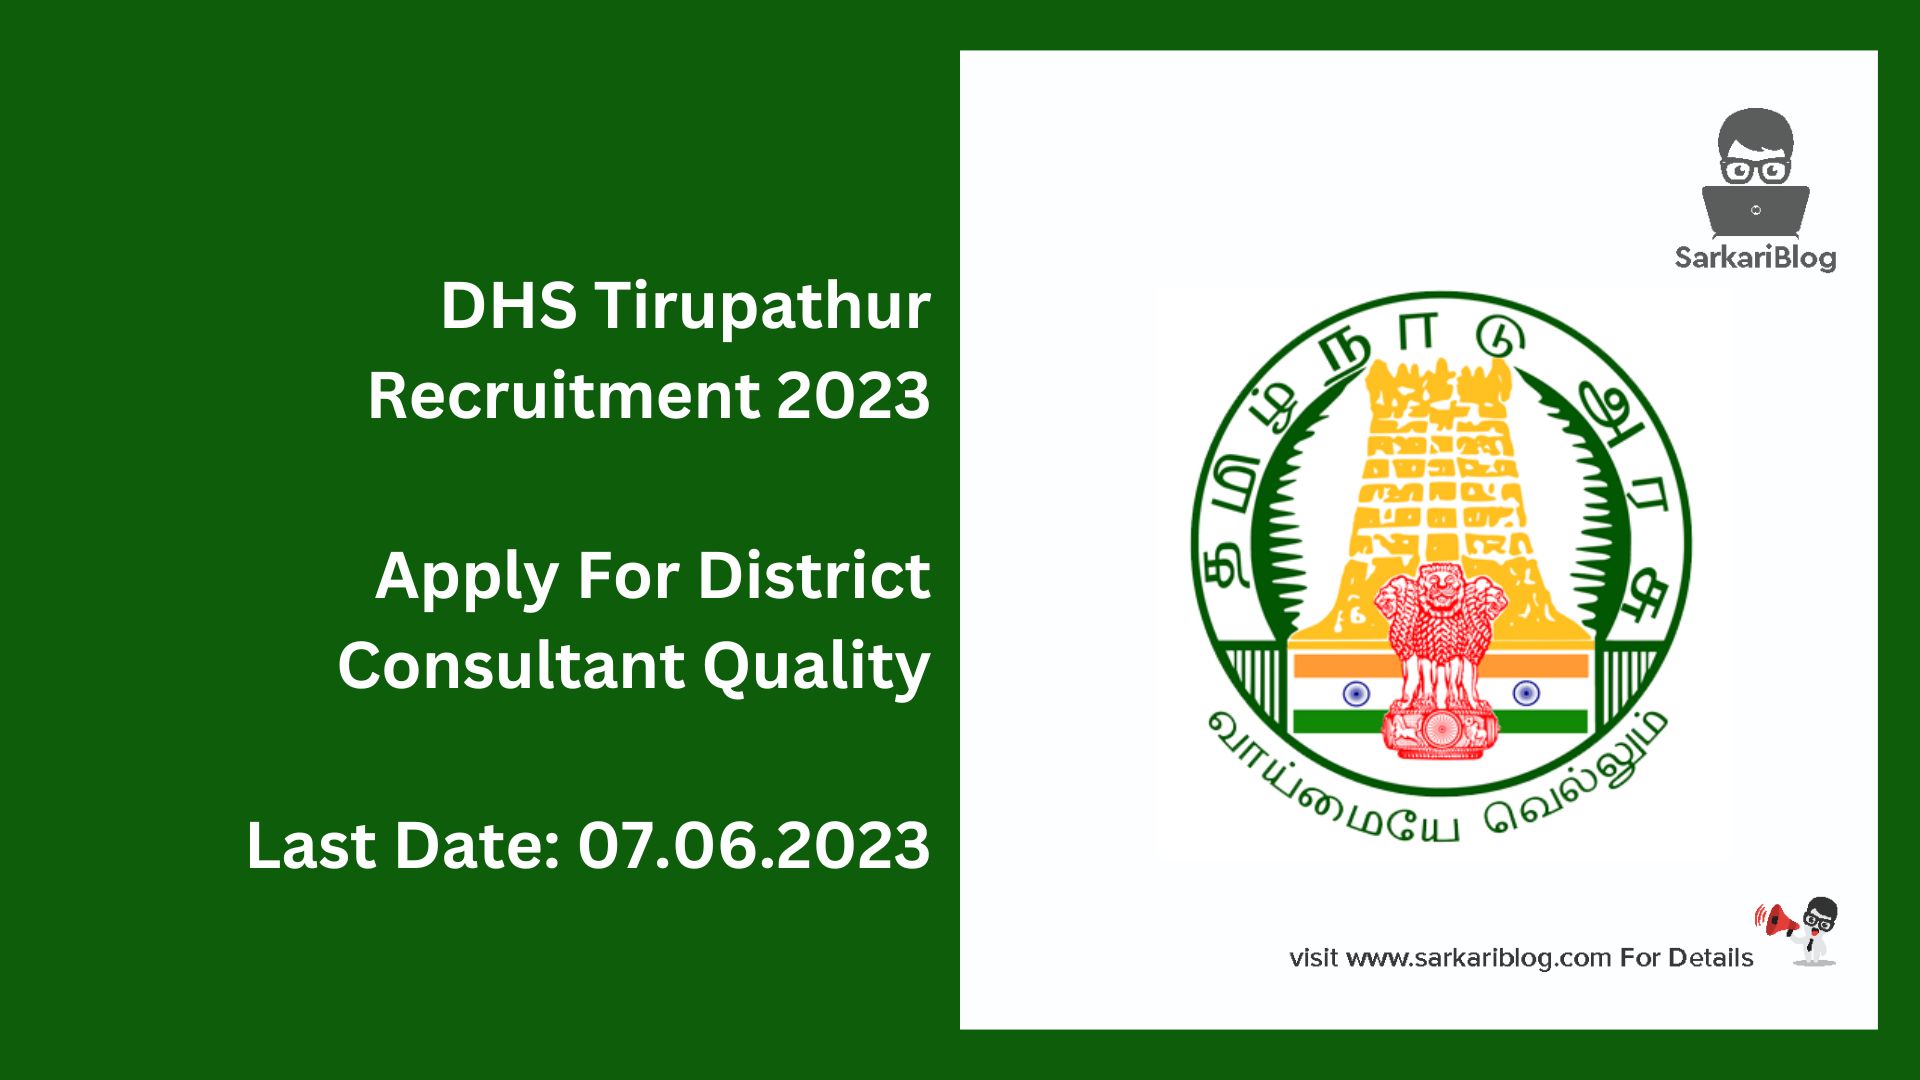 DHS Tirupathur Recruitment 2023